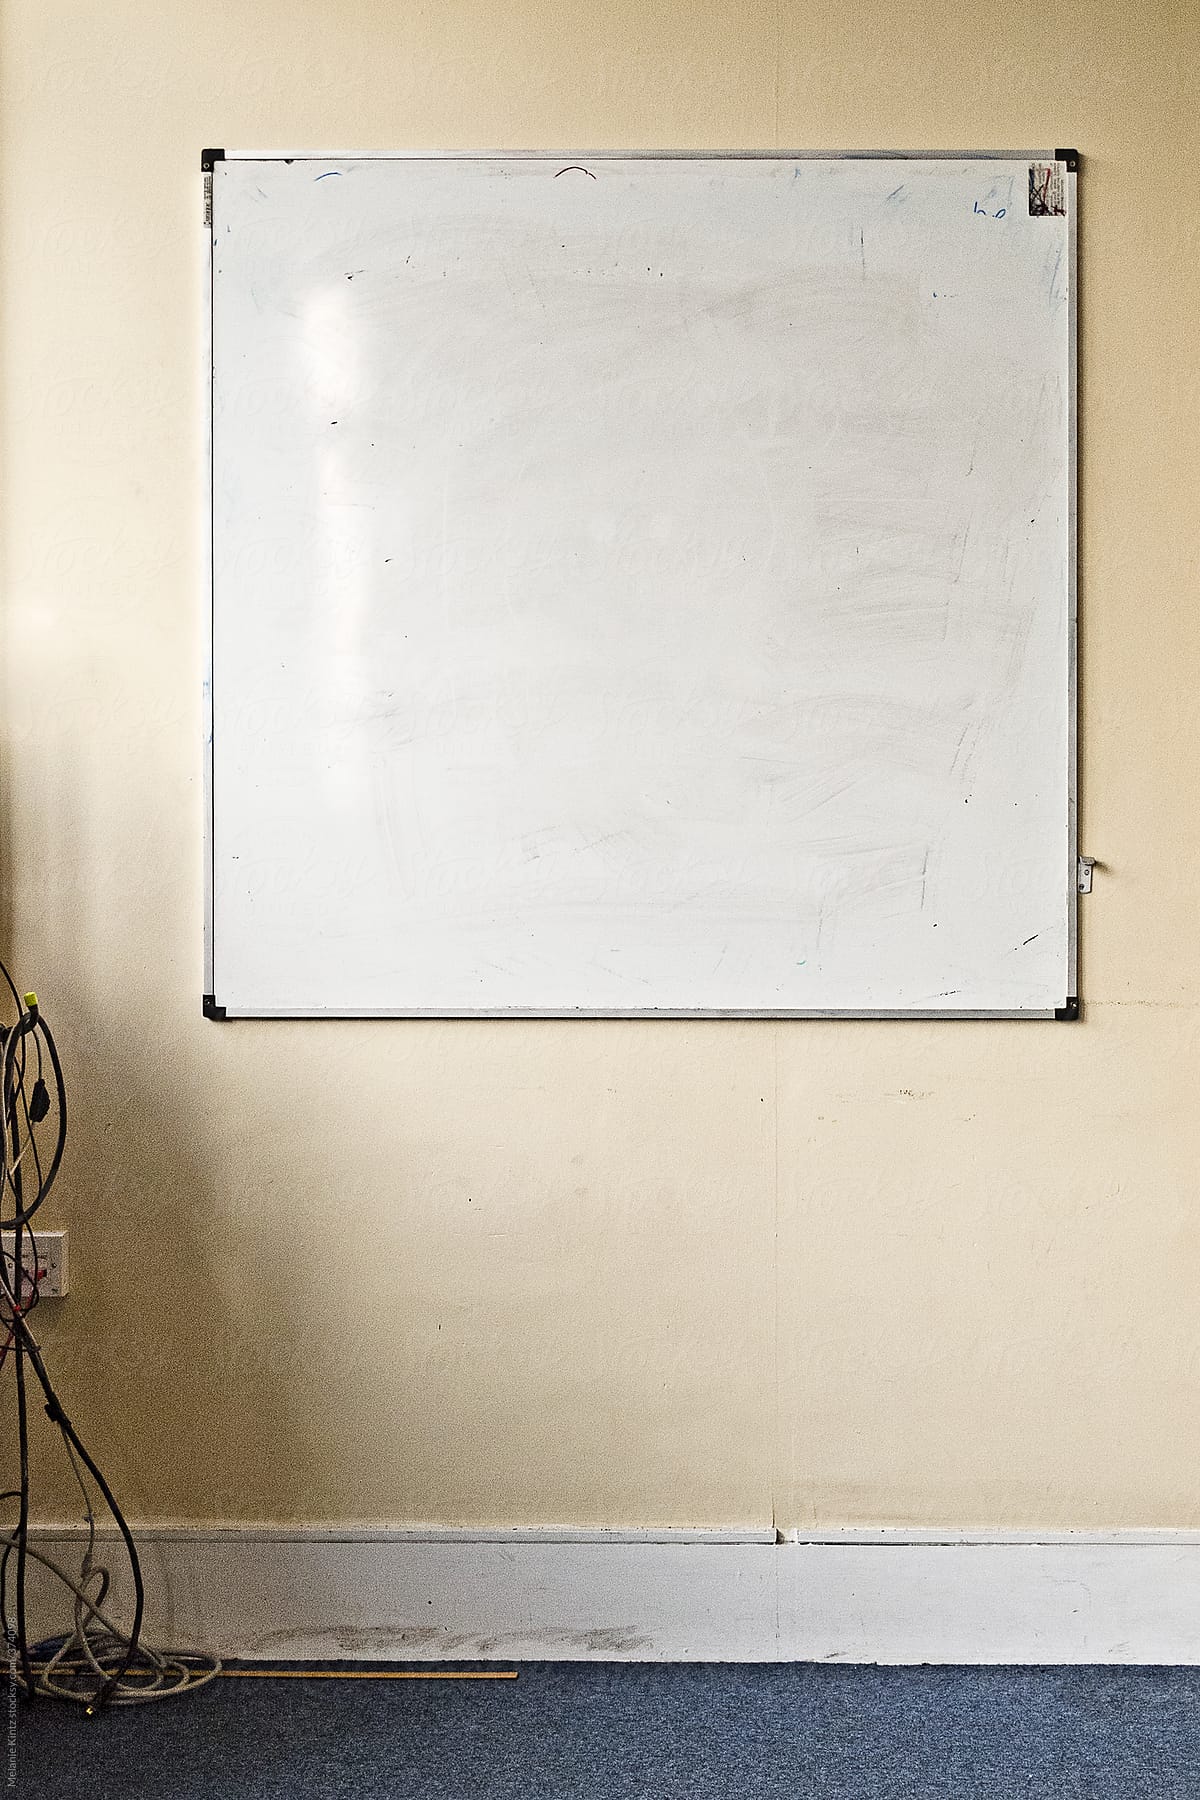 whiteboard in classroom